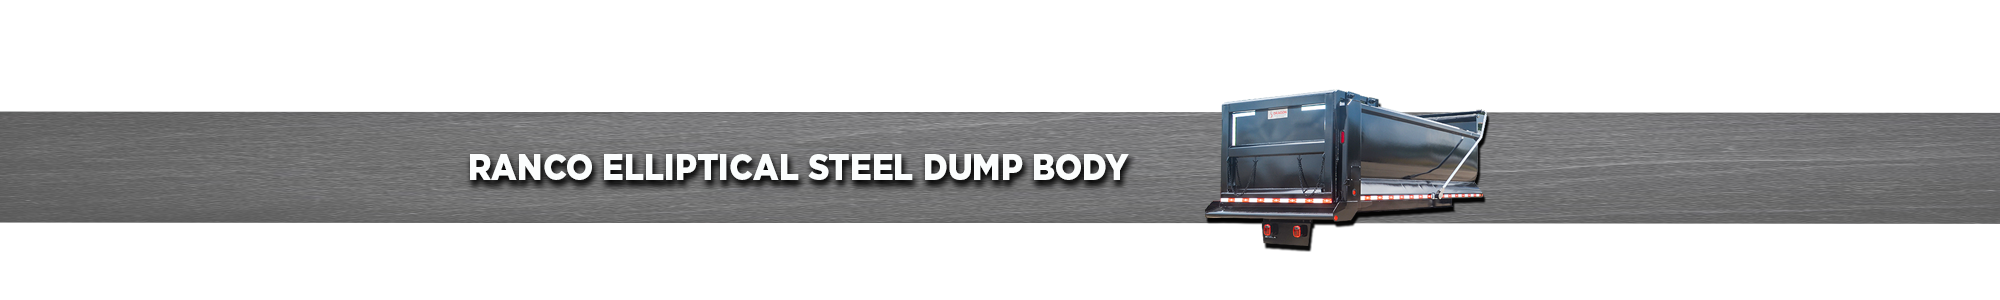 RANCO Elliptical Steel Dump Body